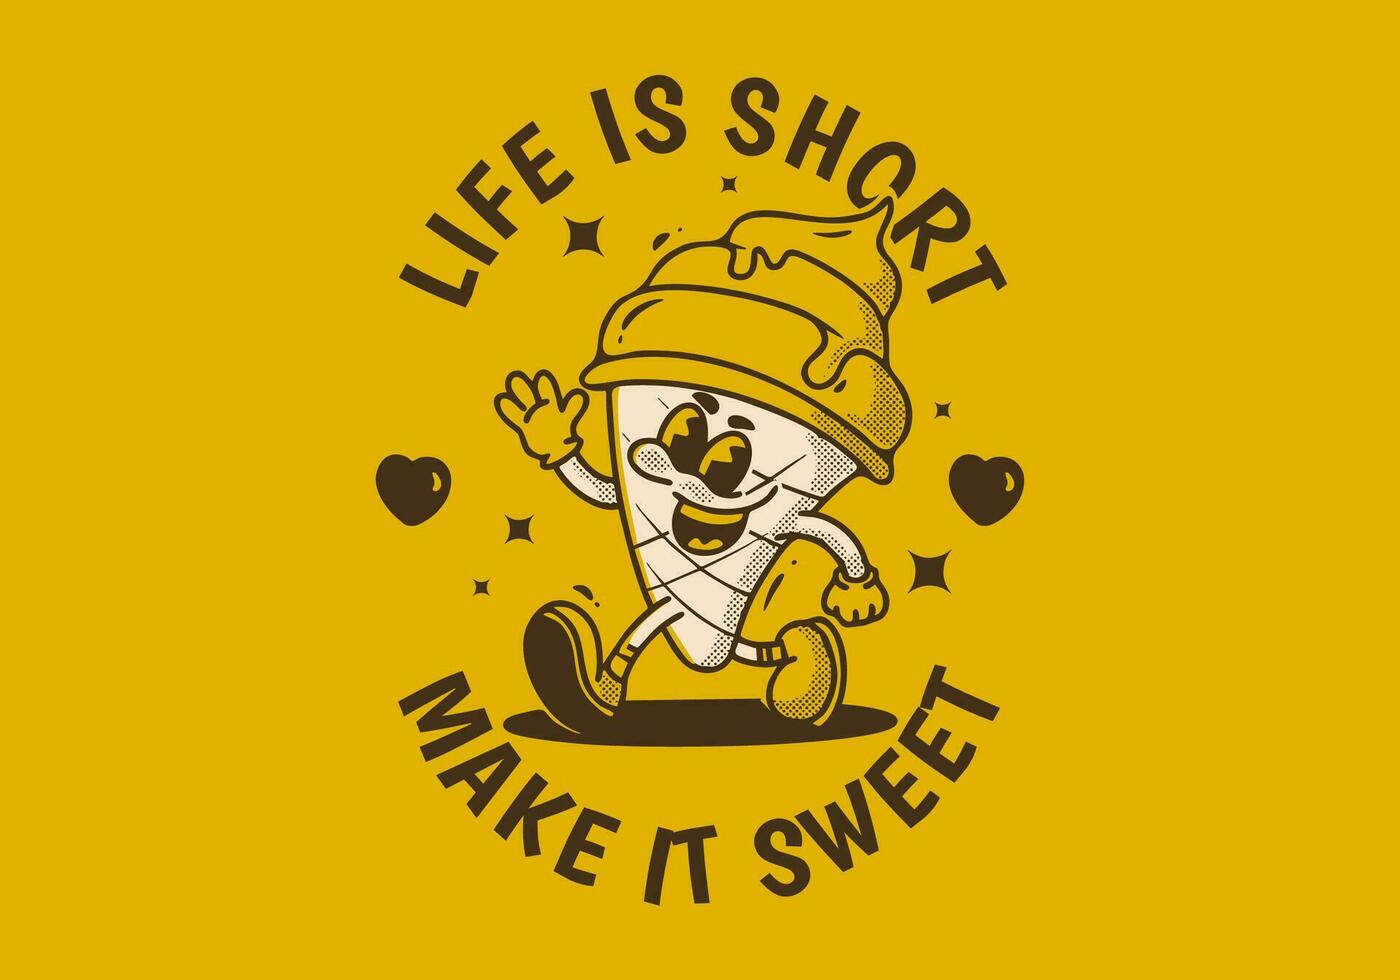 Life is short, make it sweet. Mascot character illustration of walking ice cream vector